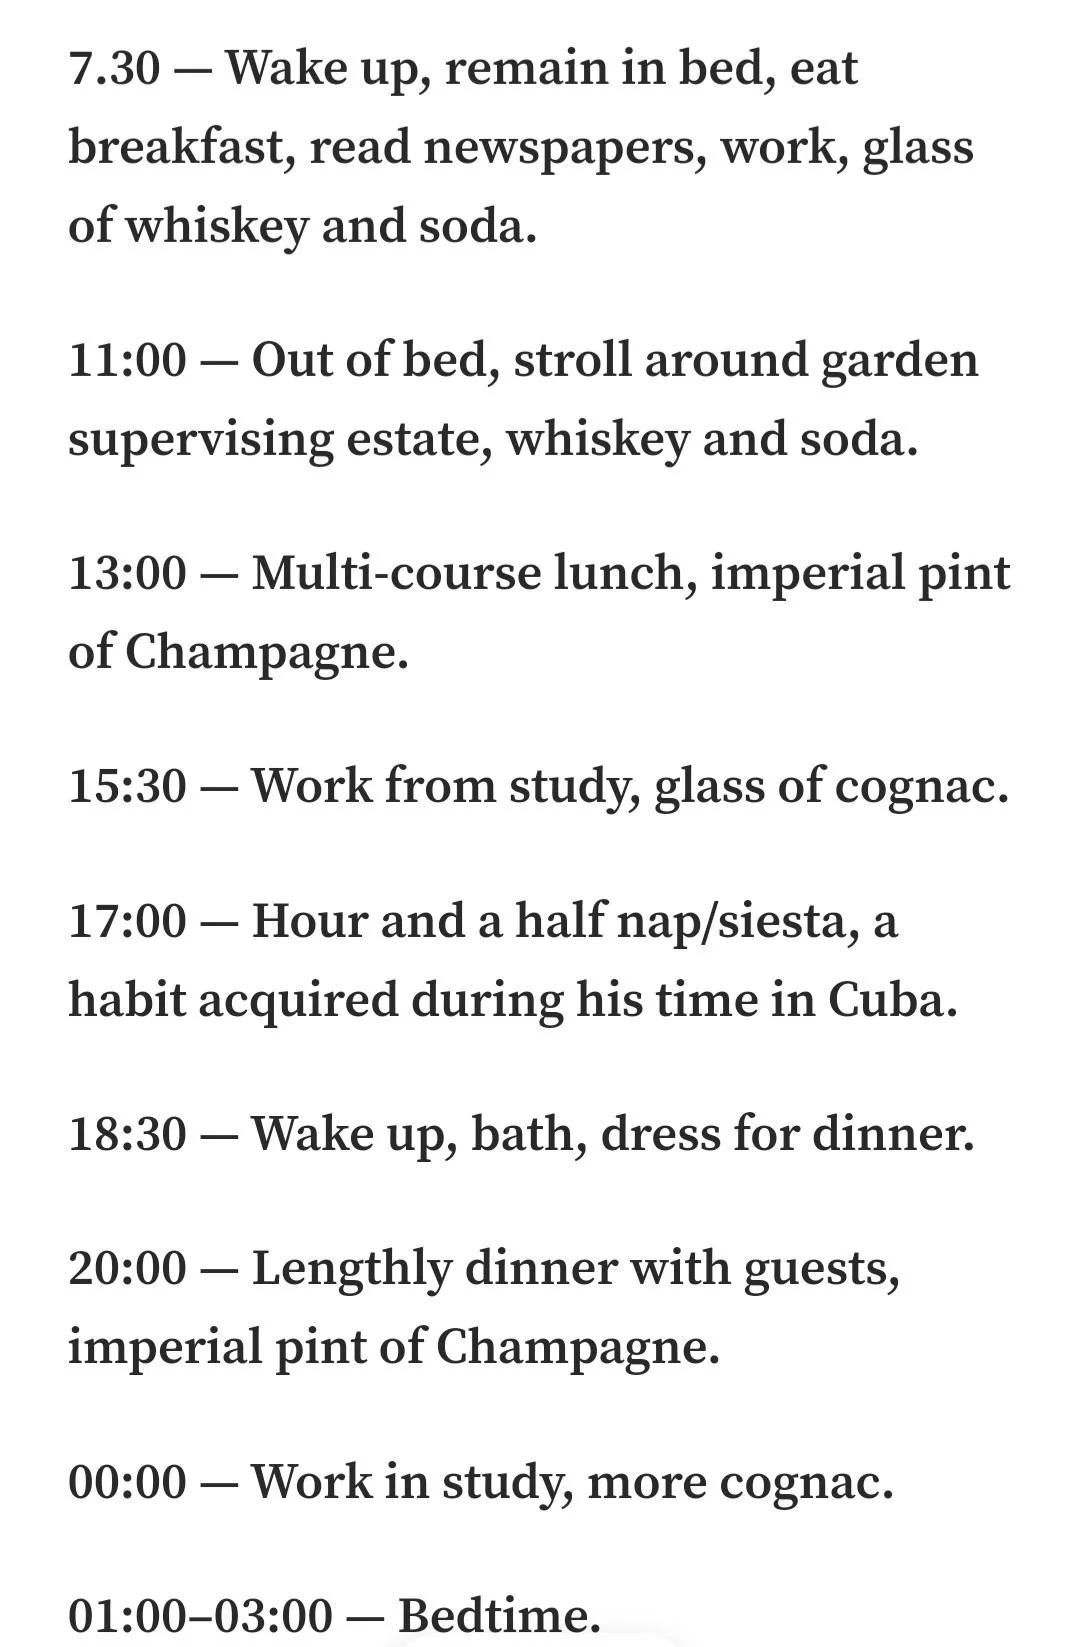 Winston Churchill's epic daily routine